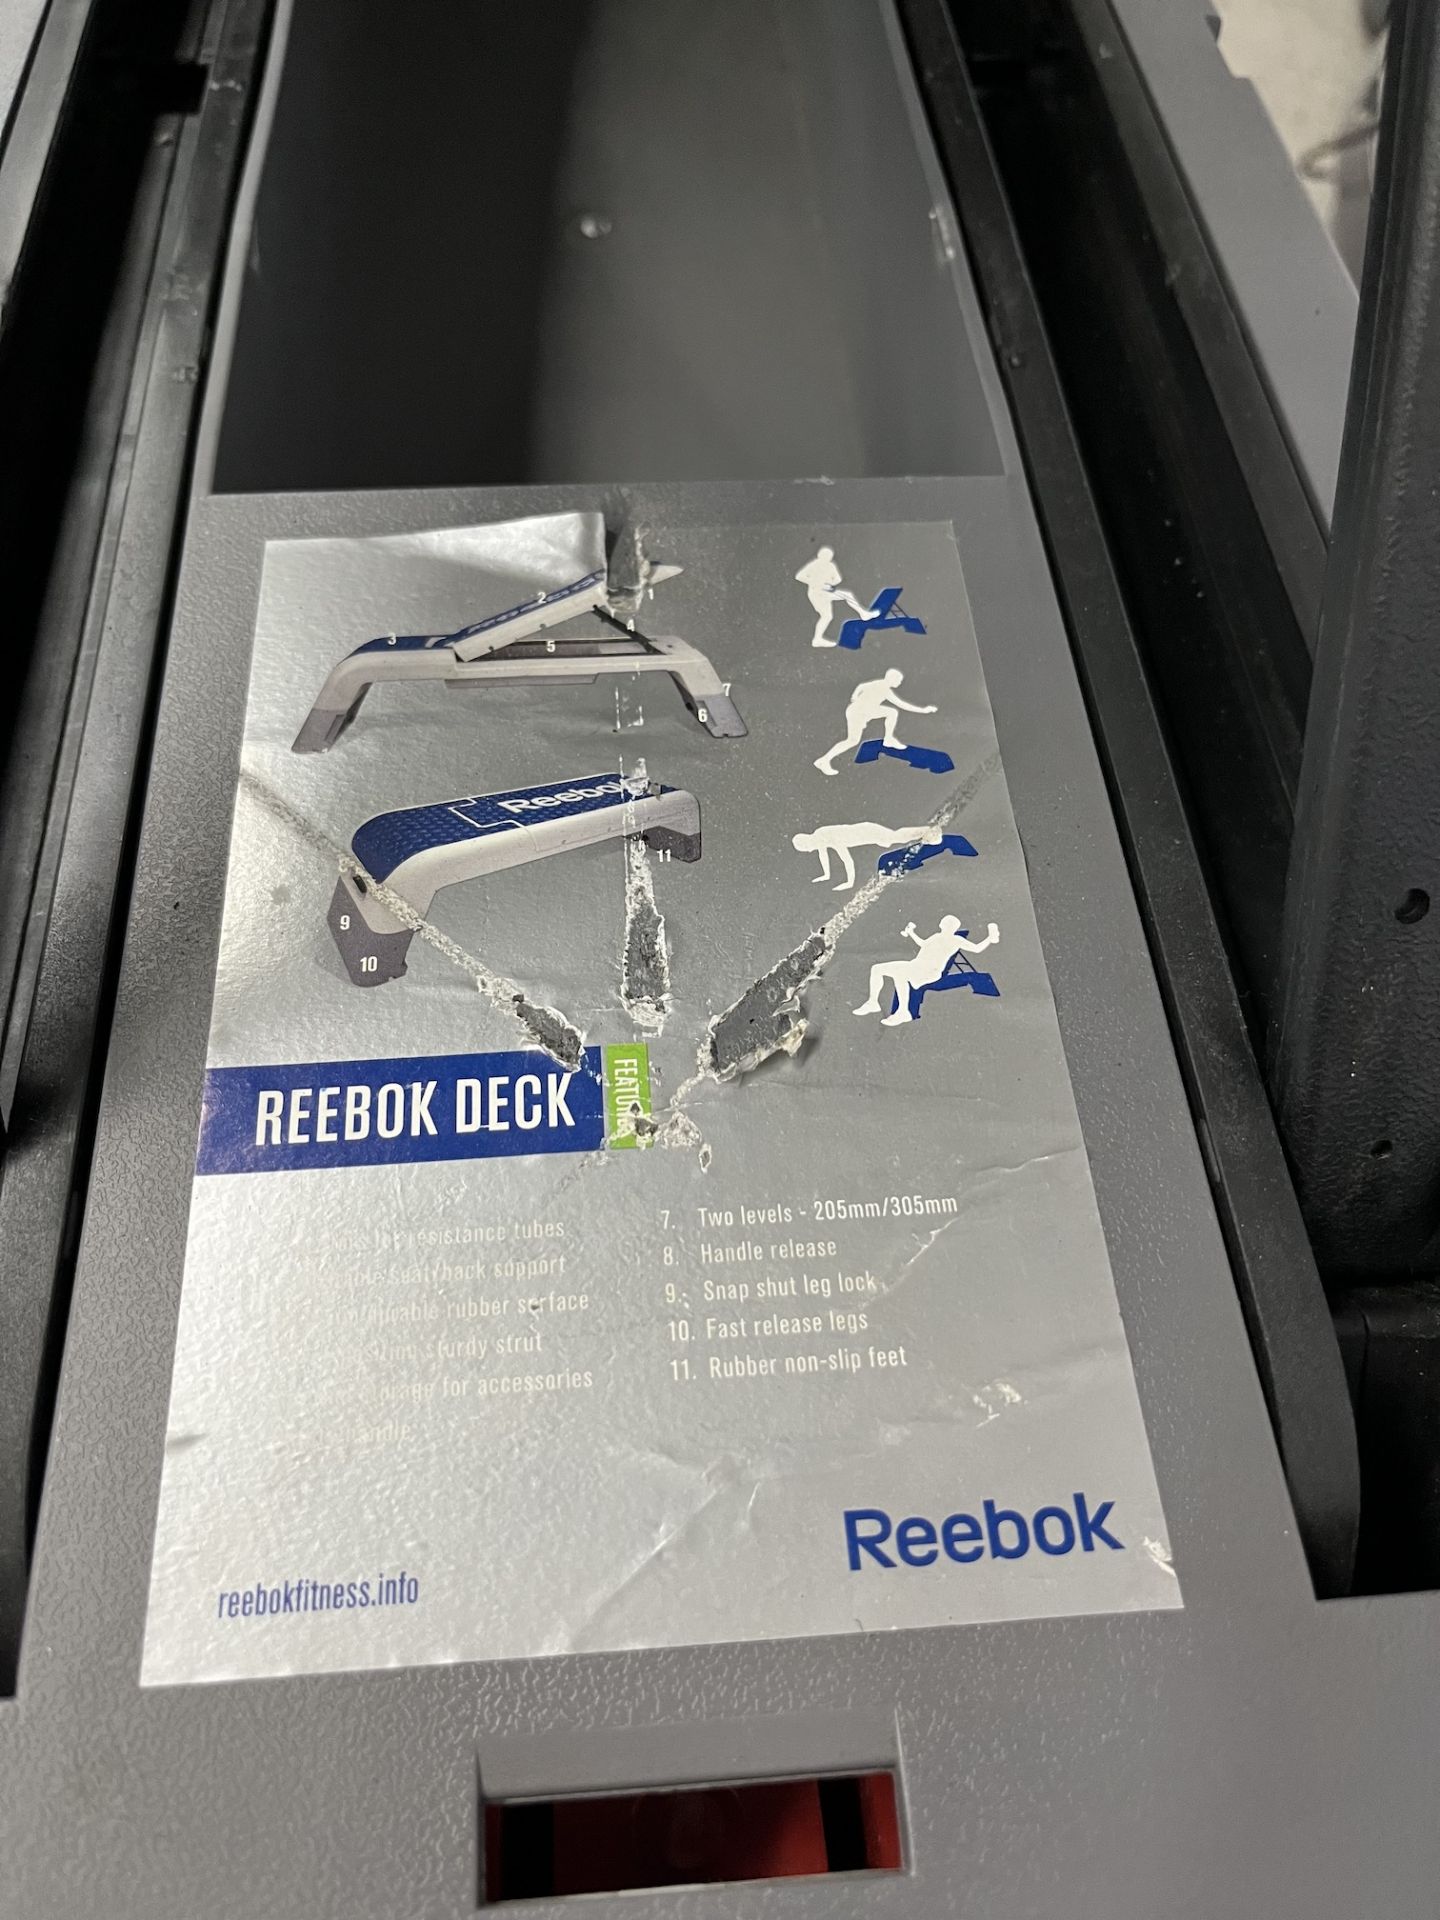 Reebok - Reebok Deck - Adjustable Workout Bench - Image 3 of 3